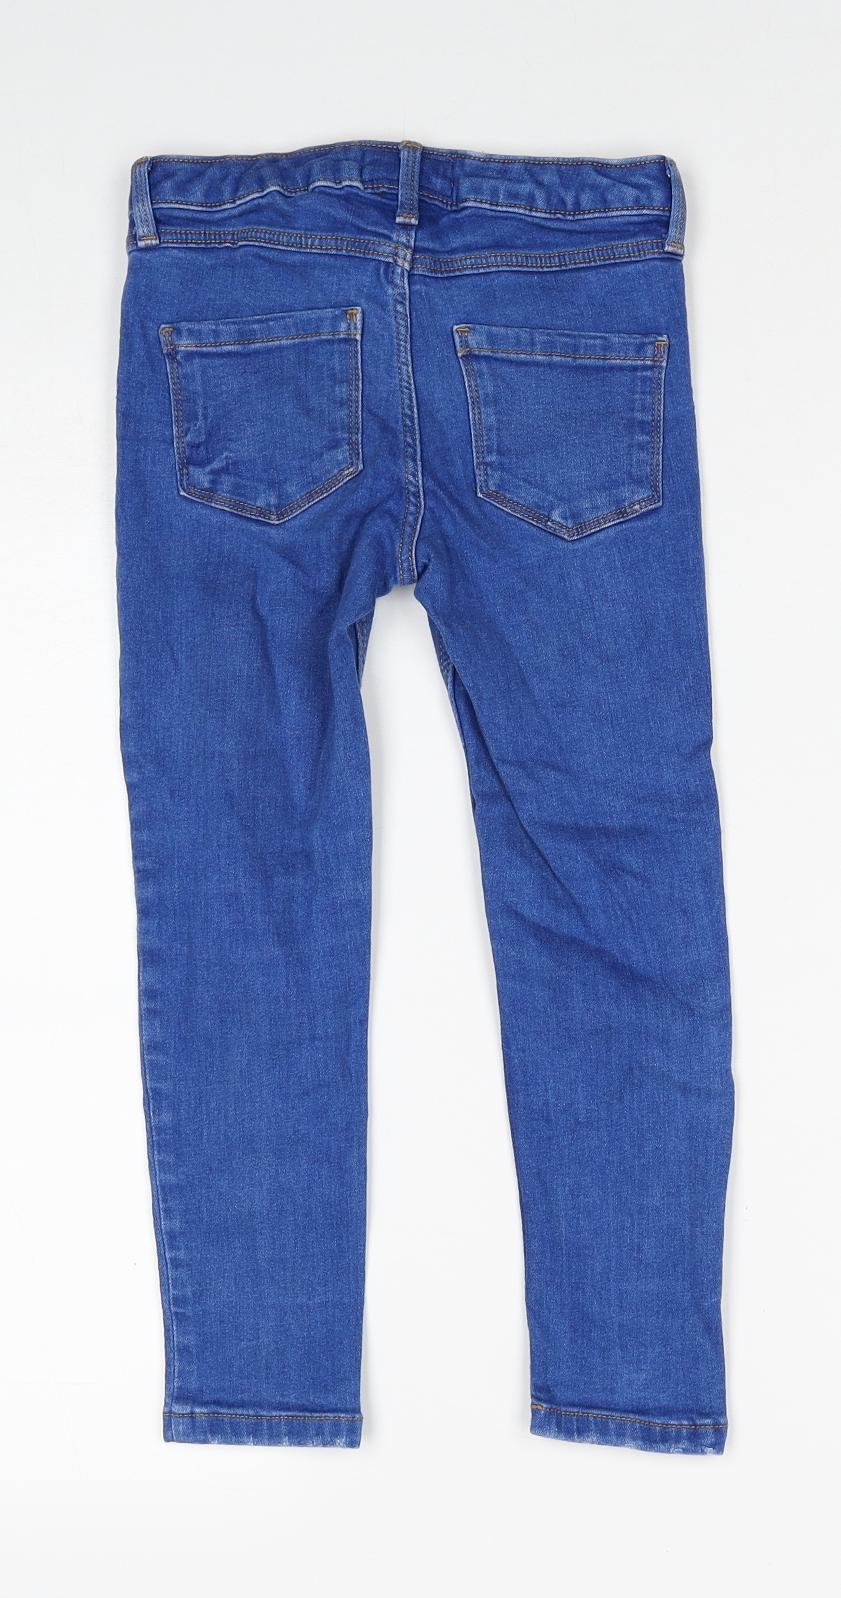 NEXT Girls Blue Cotton Straight Jeans Size 7 Years Regular Zip